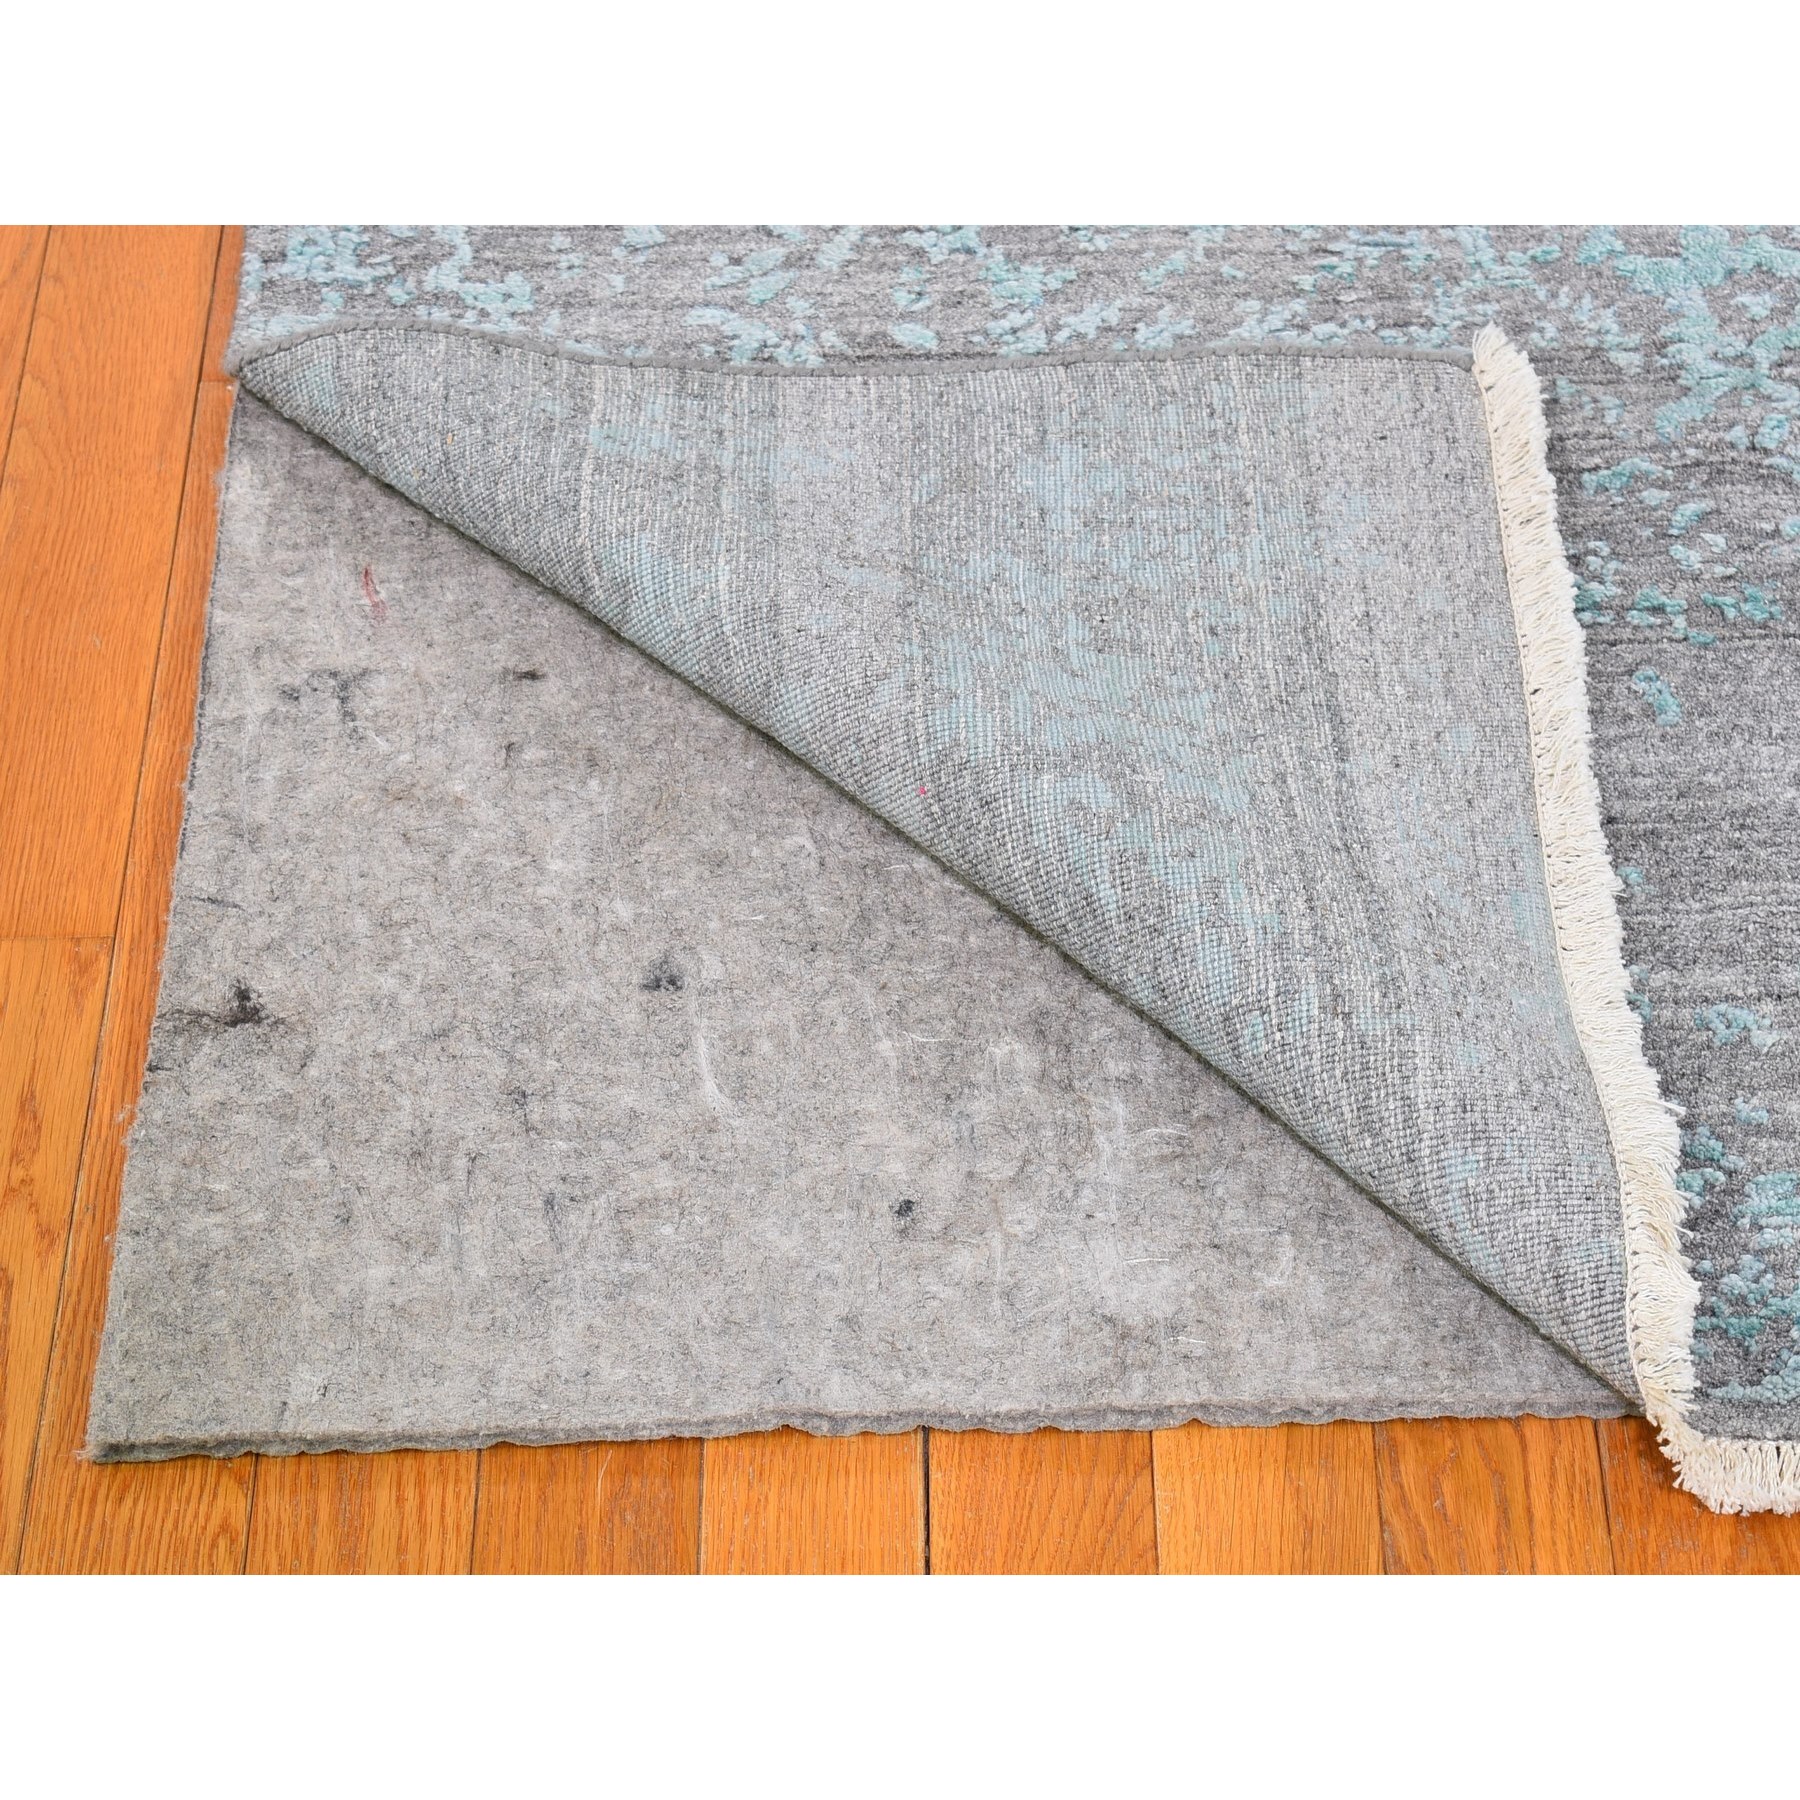 10'x10' Seafoam Green Tone on Tone Broken Persian Design Wool and Silk Hand Woven Square Oriental Rug 